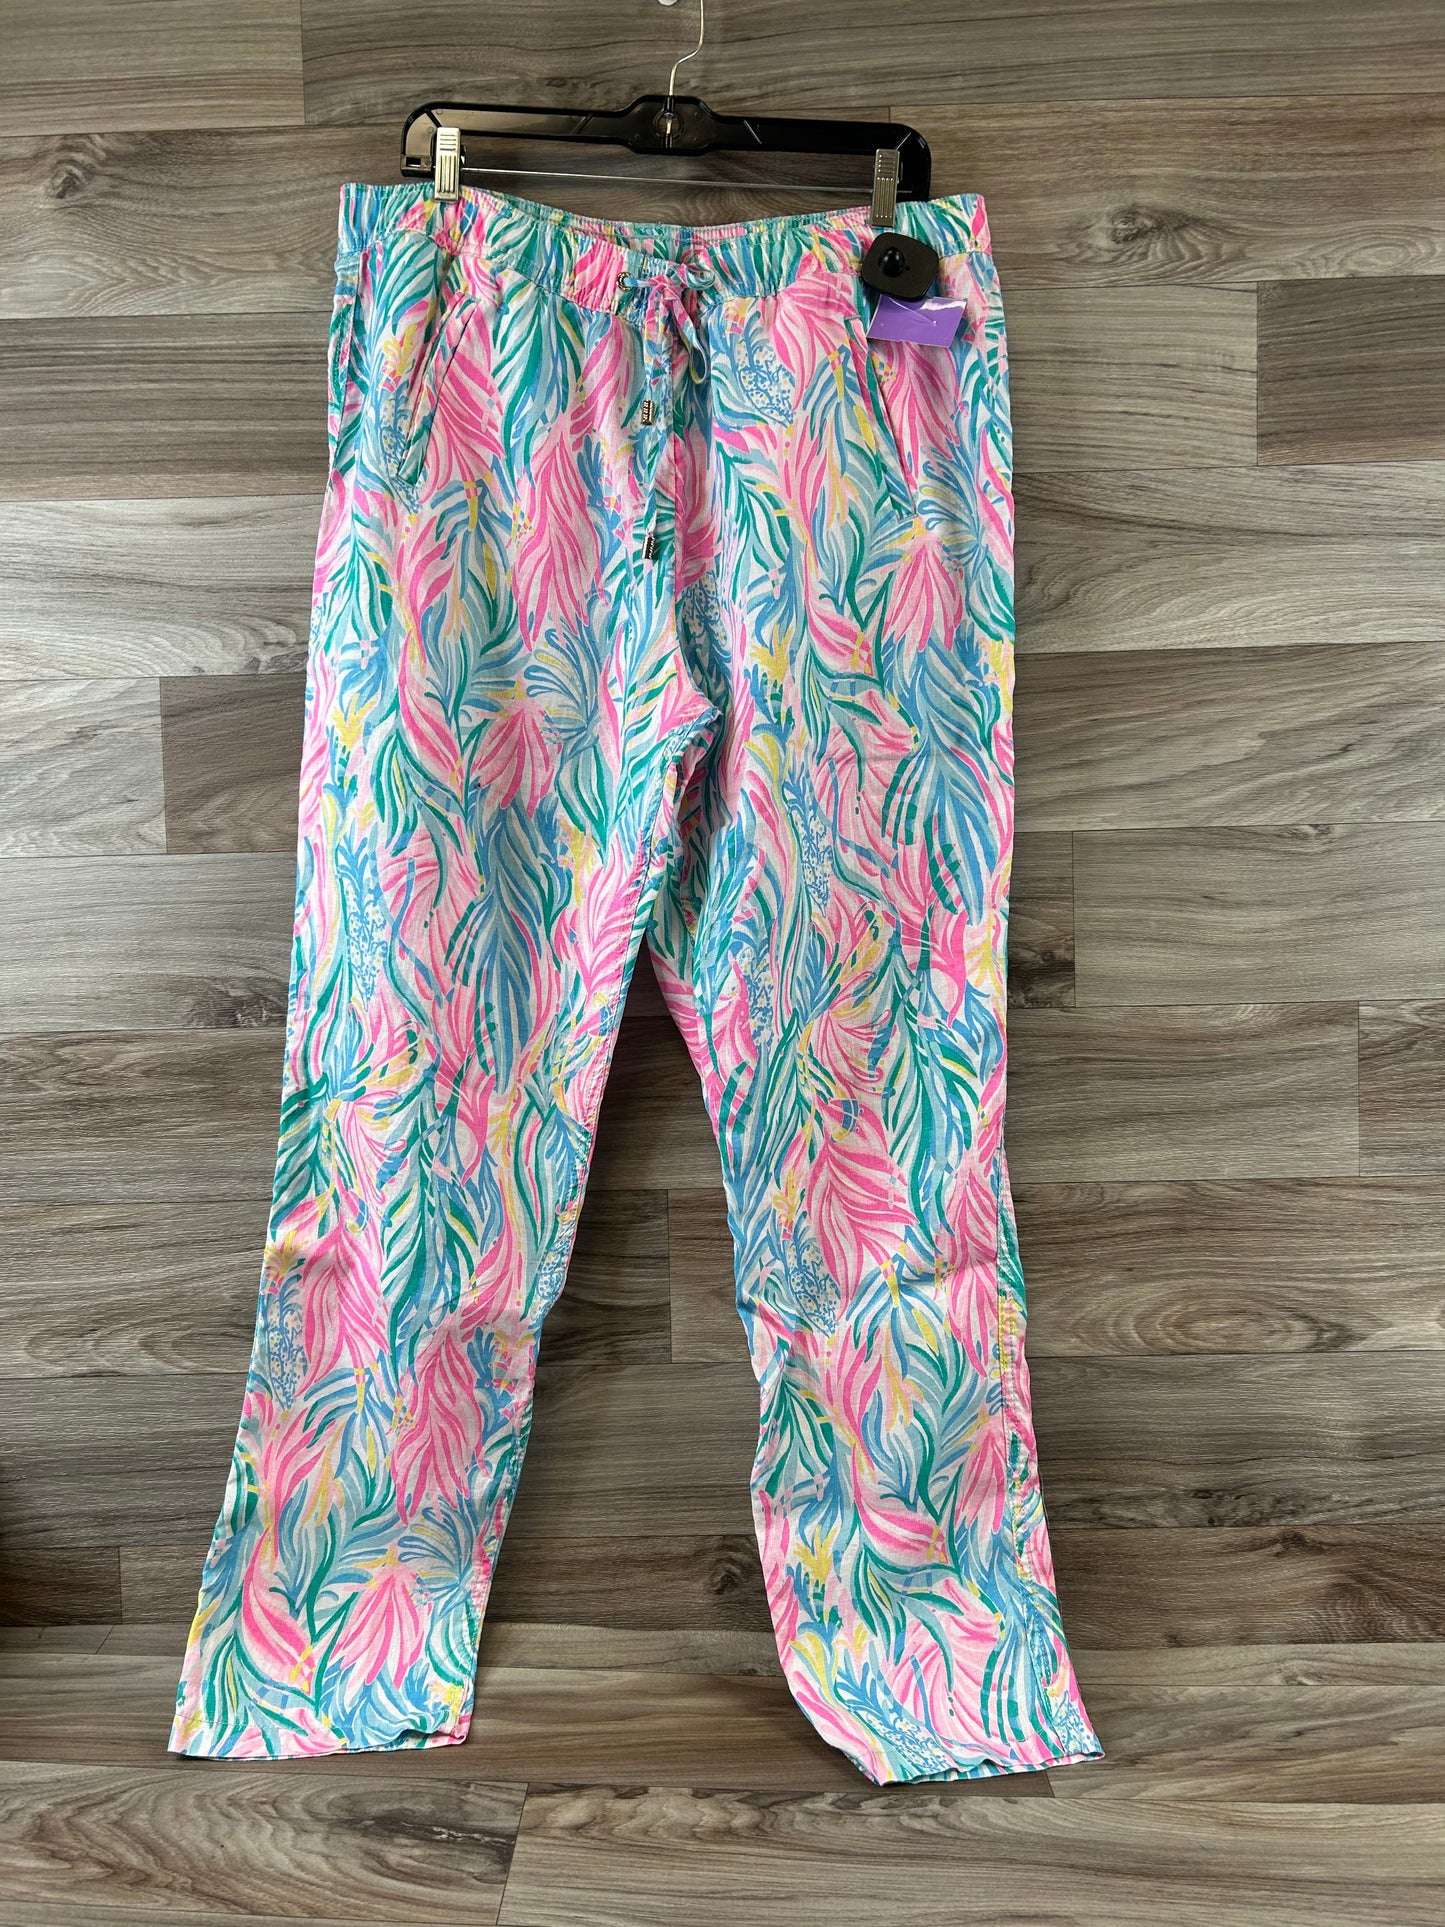 Blue & Pink Pants Designer Lilly Pulitzer, Size Xl